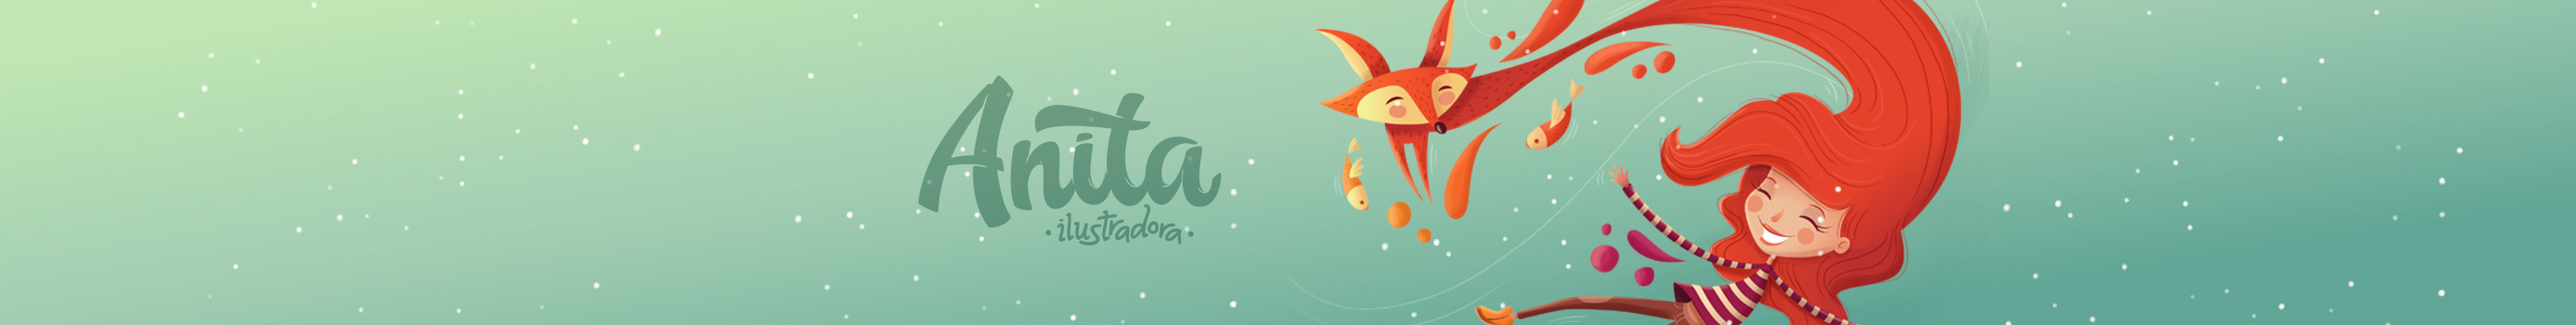 Anita Ilustradora's profile banner